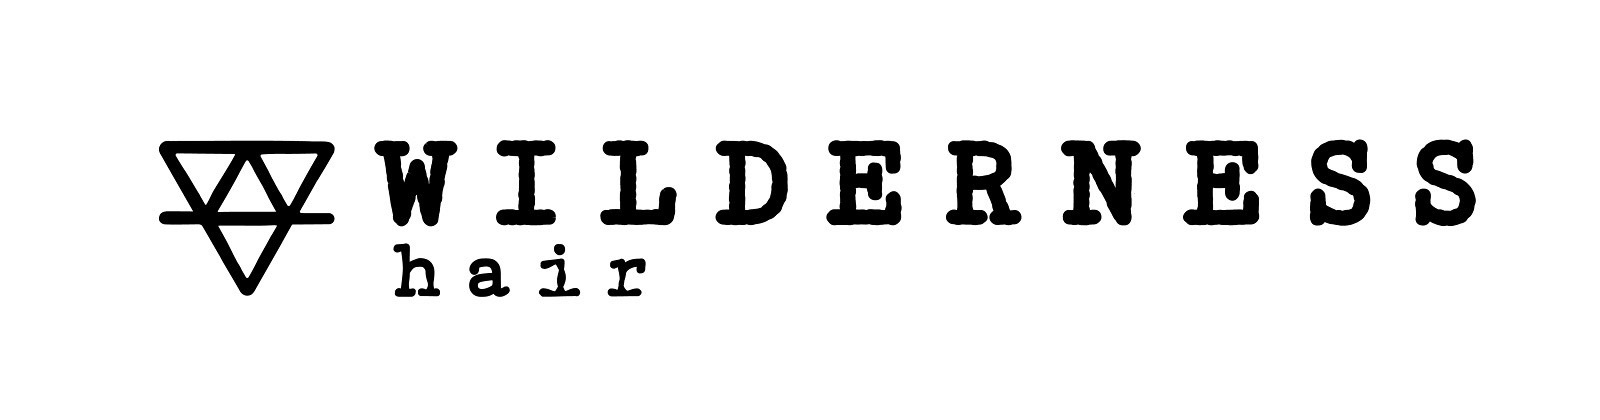 logo for Wilderness Lune Valley